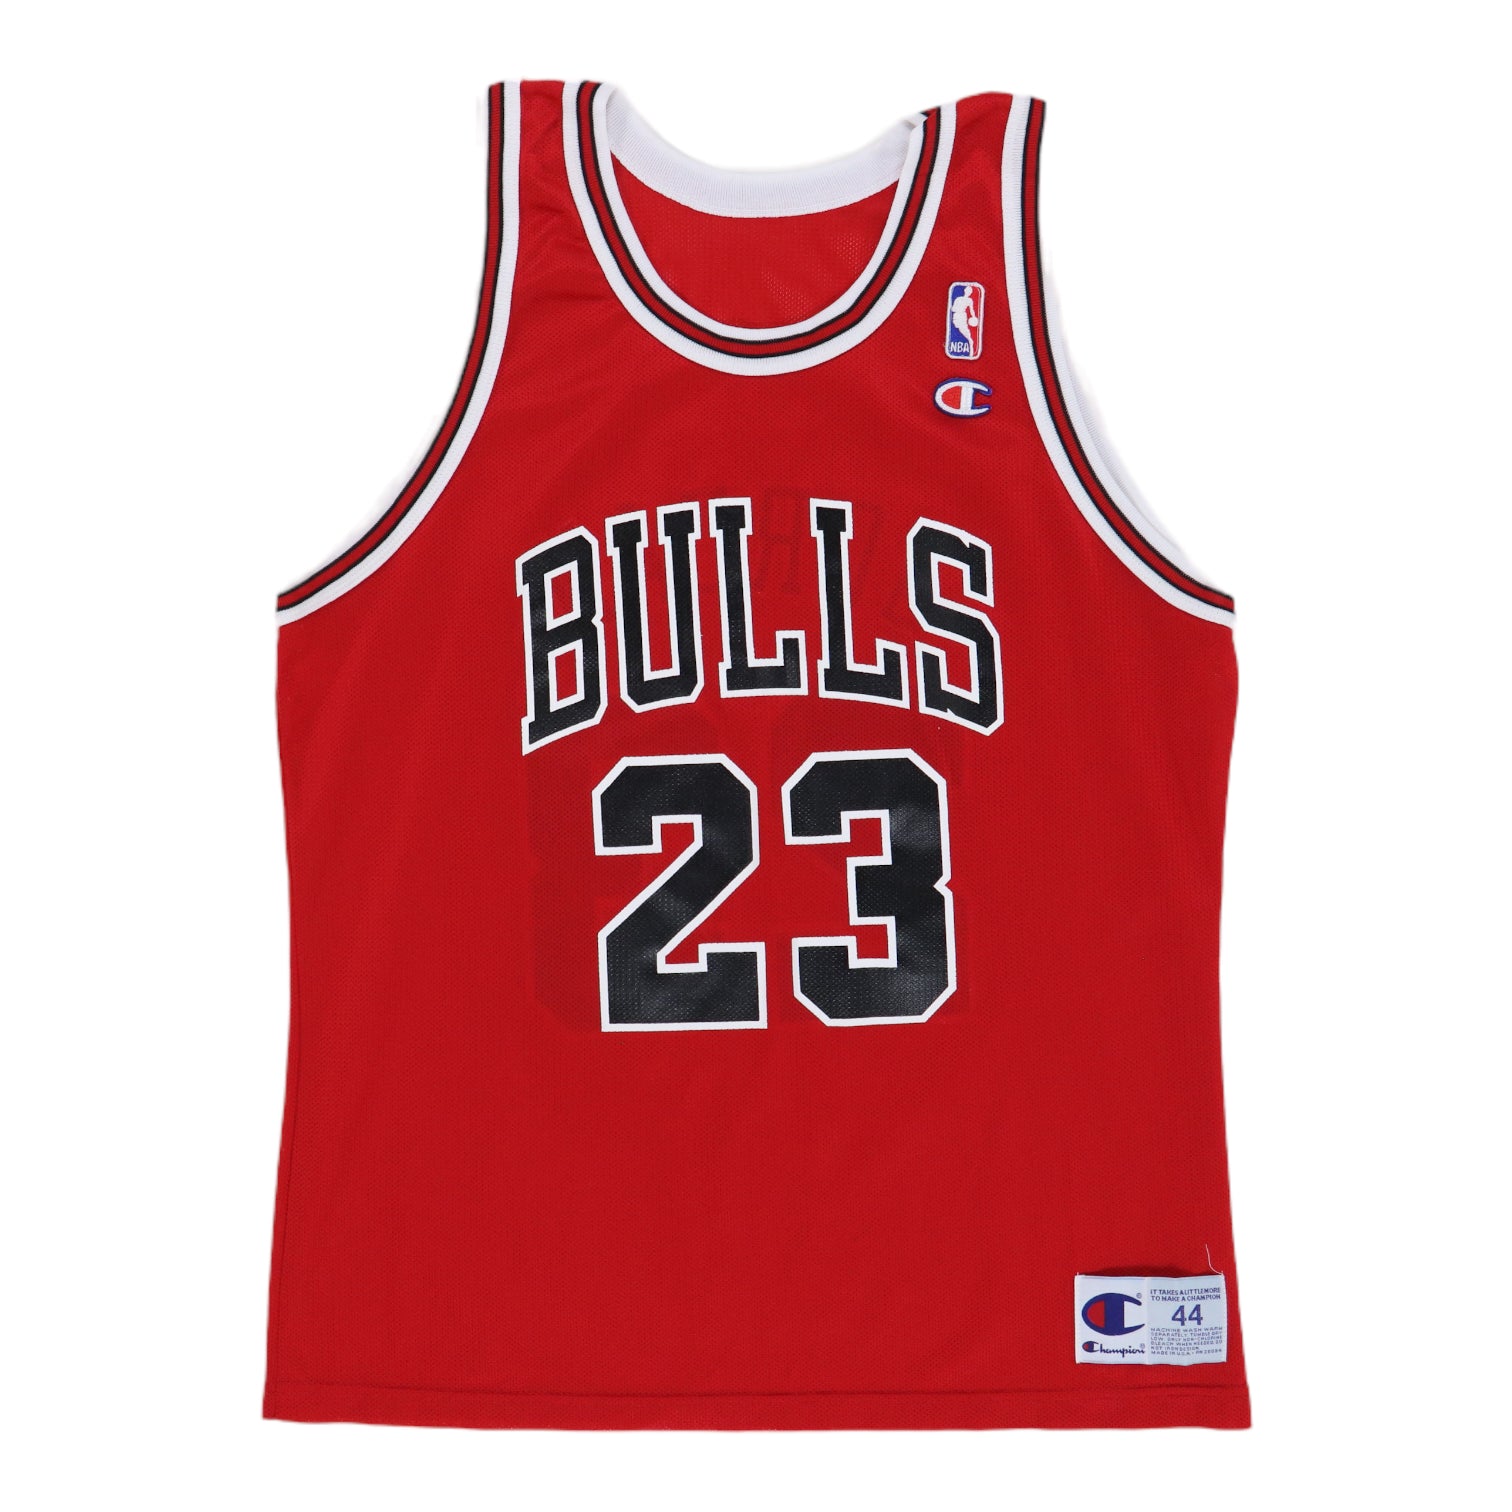 Vintage Champion Michael Jordan Jersey Chicago Bulls NBA Size 44